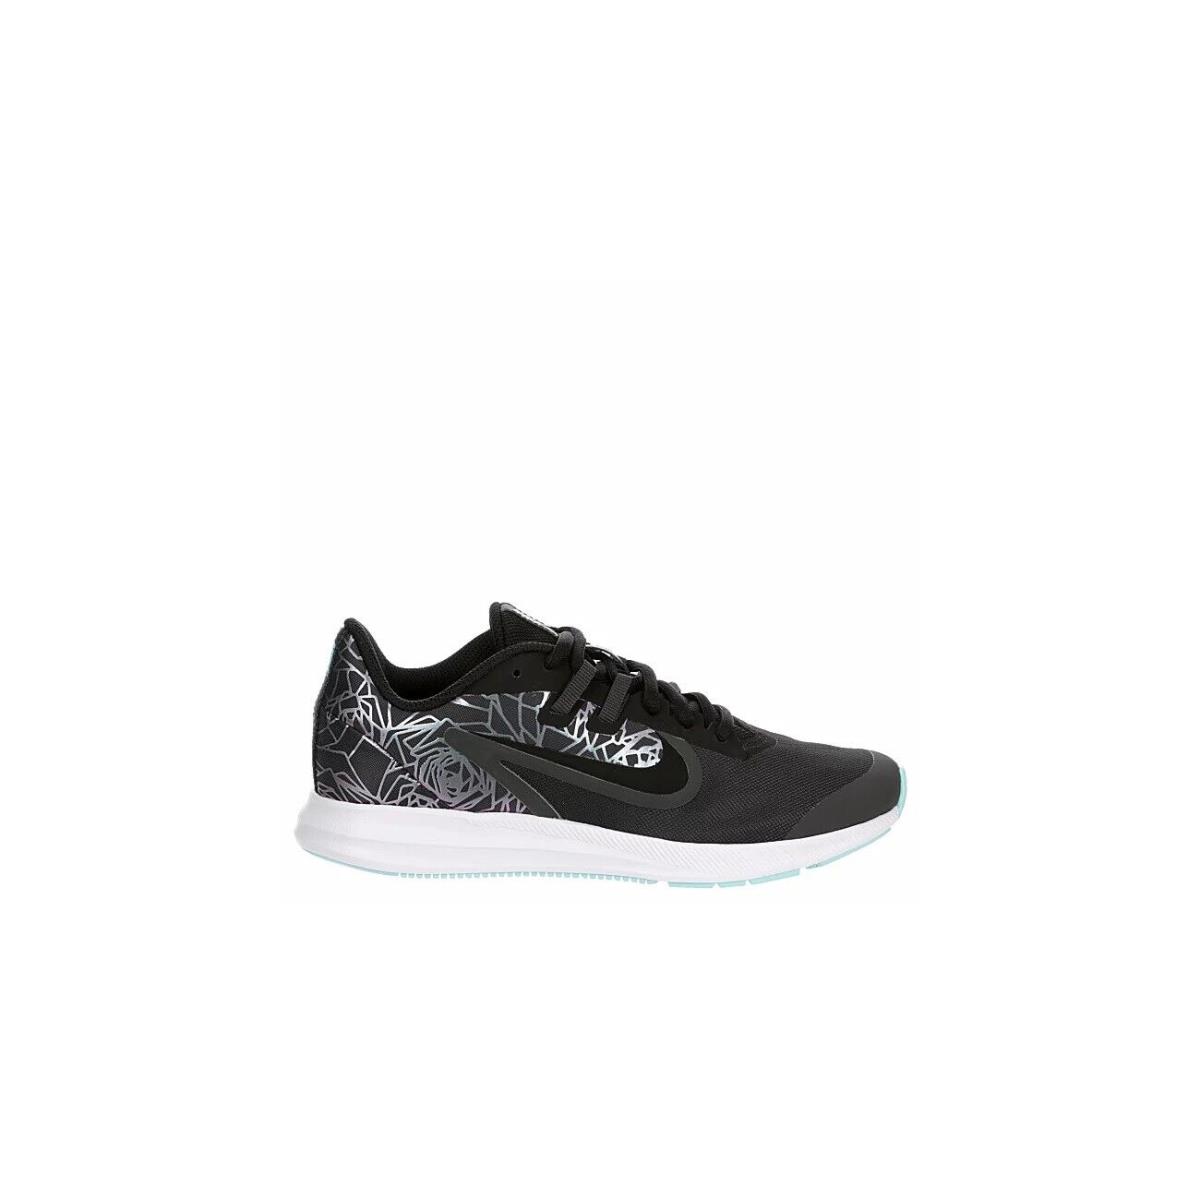 Nike shoes Downshifter Rebel - Anthracite/Black/Light Aqua 8